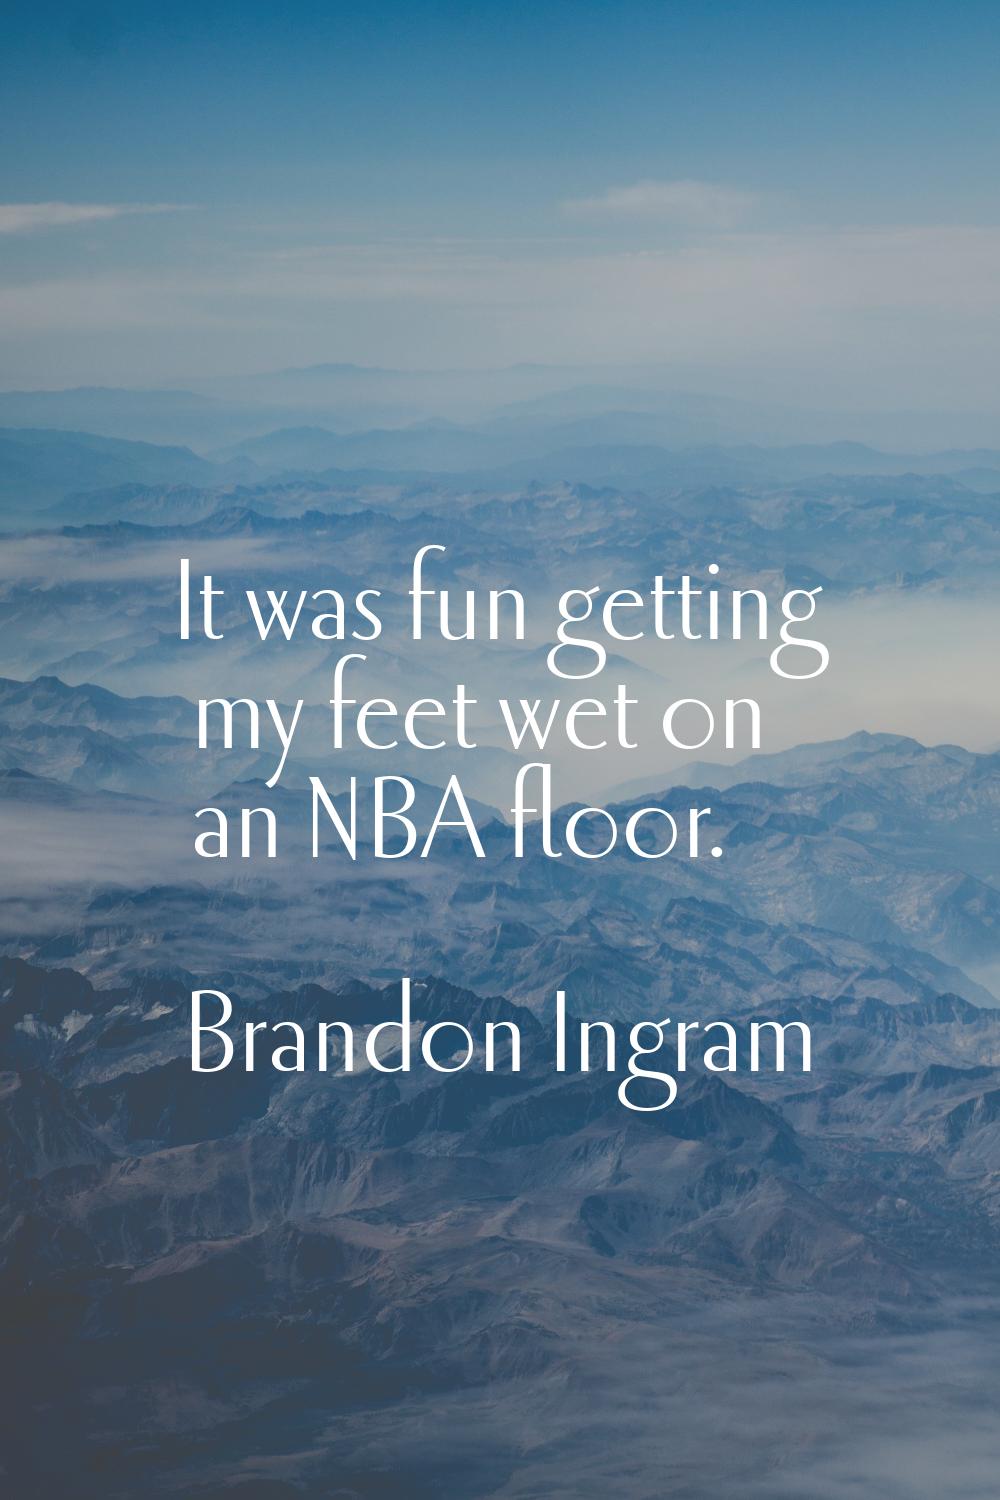 It was fun getting my feet wet on an NBA floor.